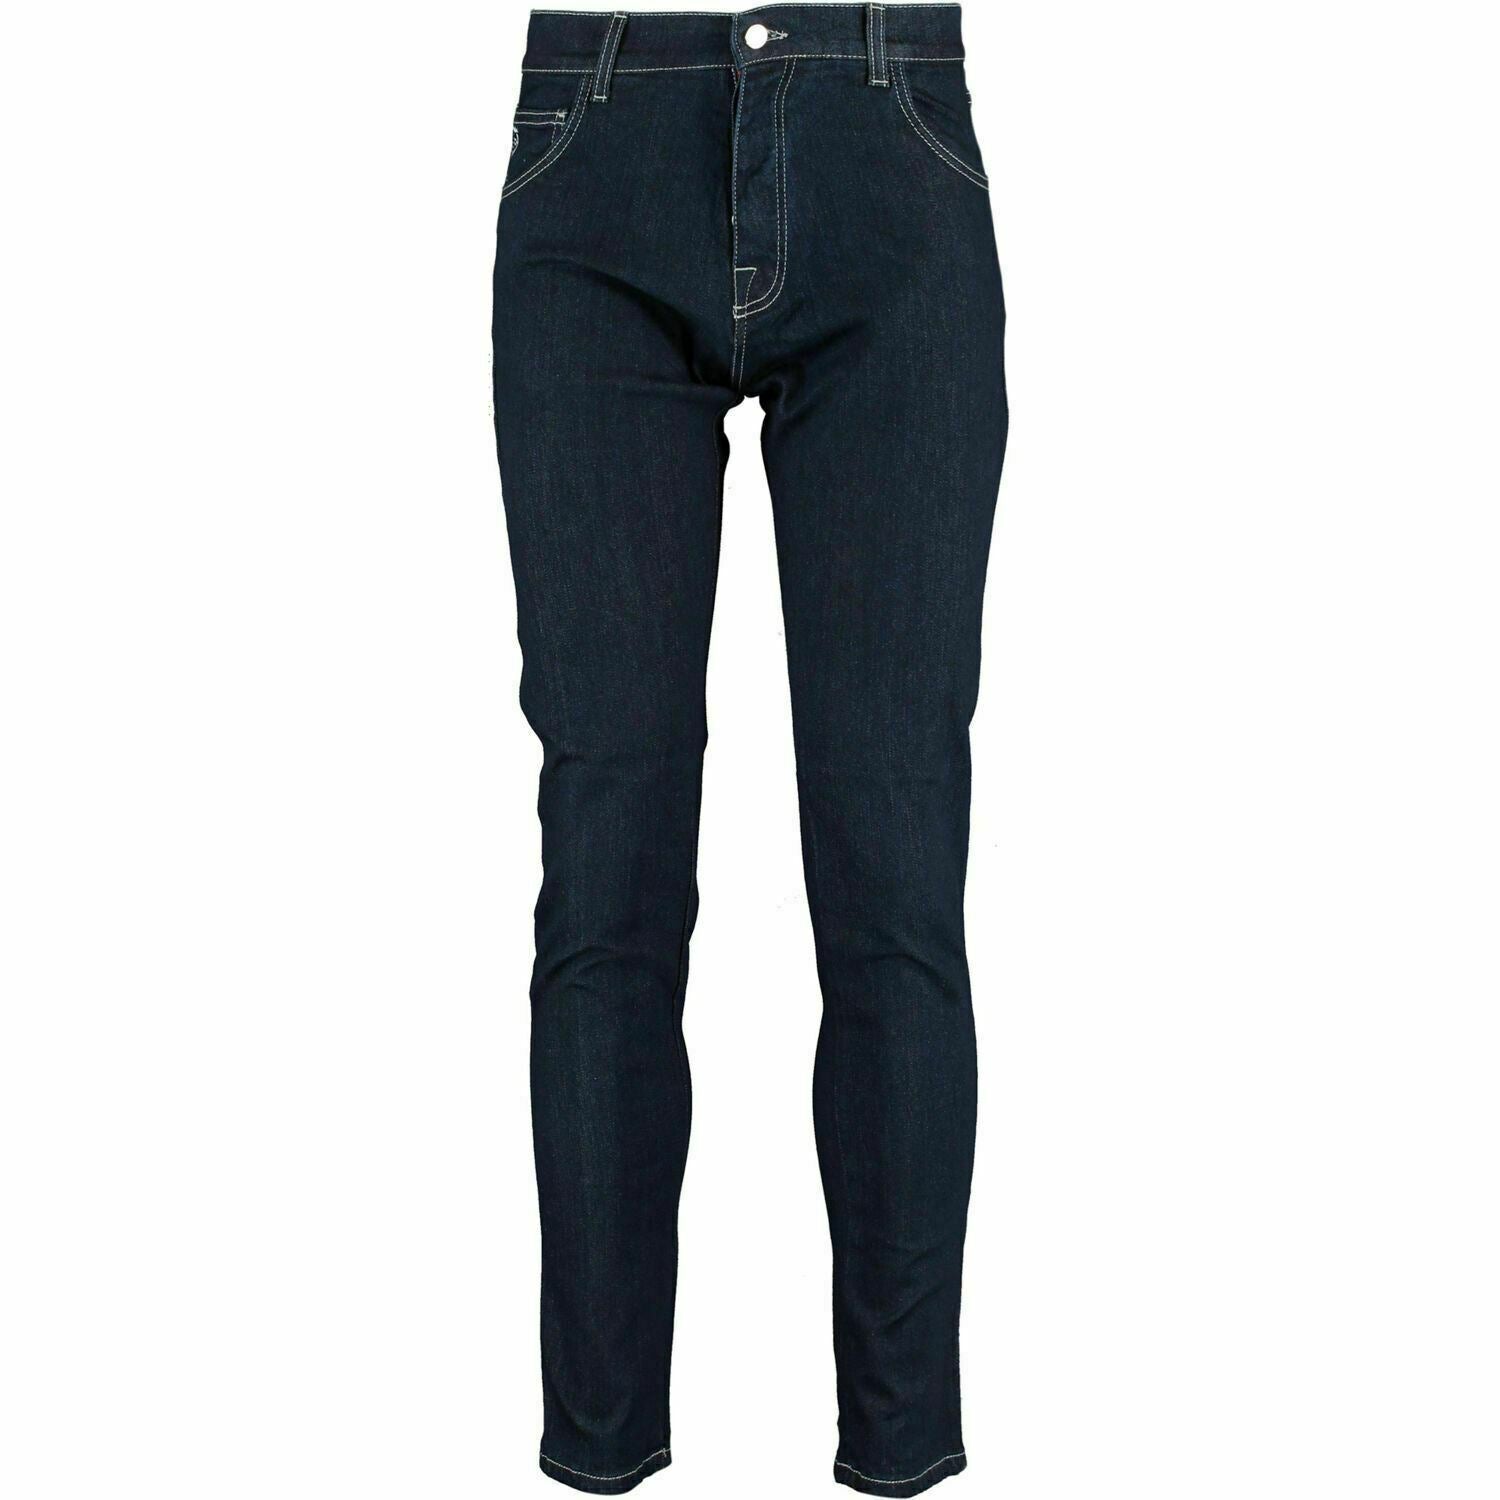 CASTELBAJAC Paris - Men's Dark Blue Modern Fit Jeans, size W34